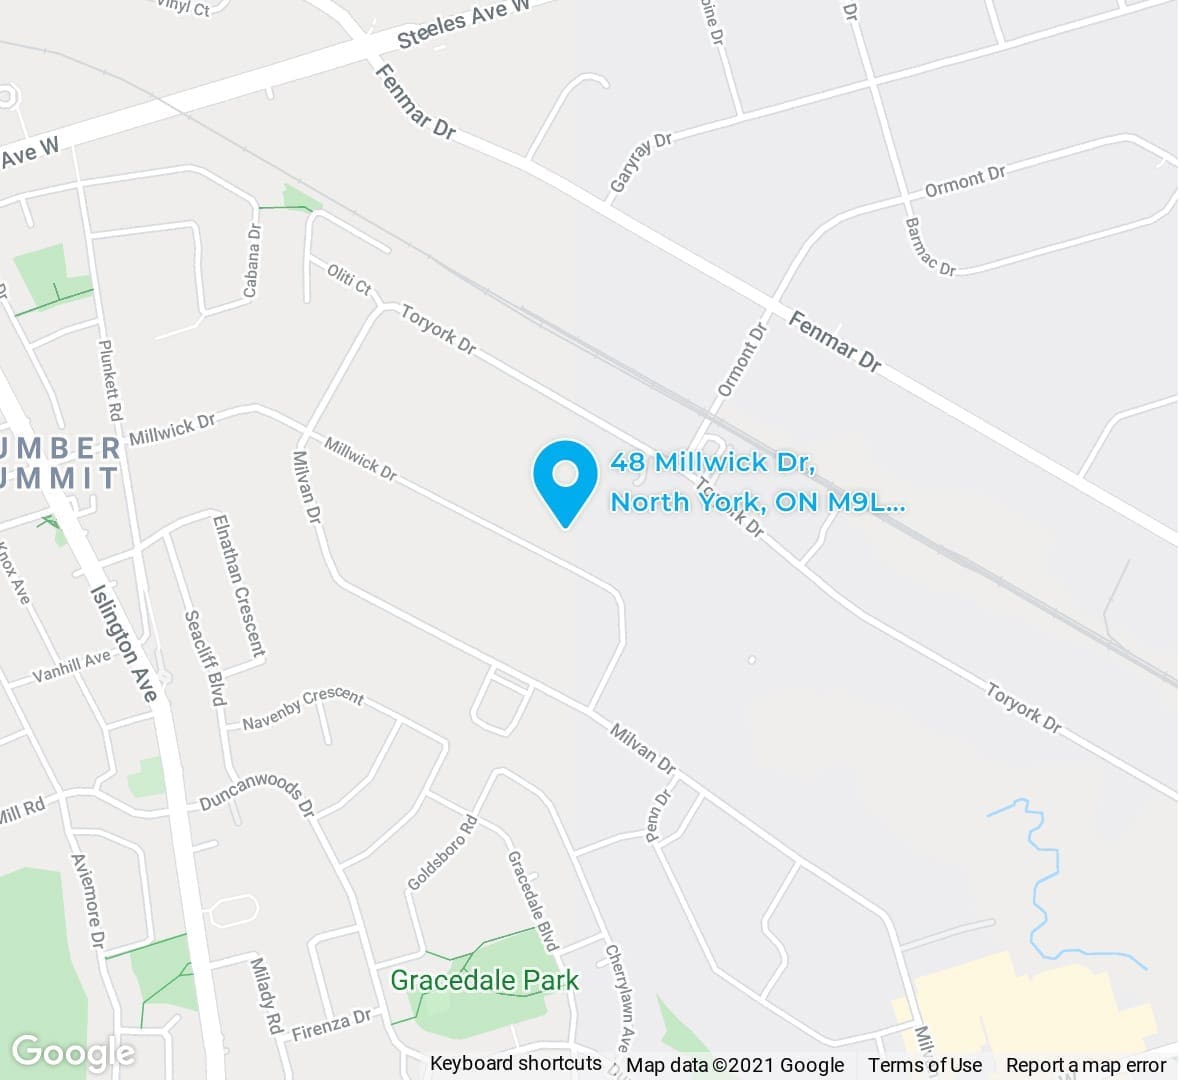 Google map snapshot. Blue location pin at 48 Millwick Drive, North York ON